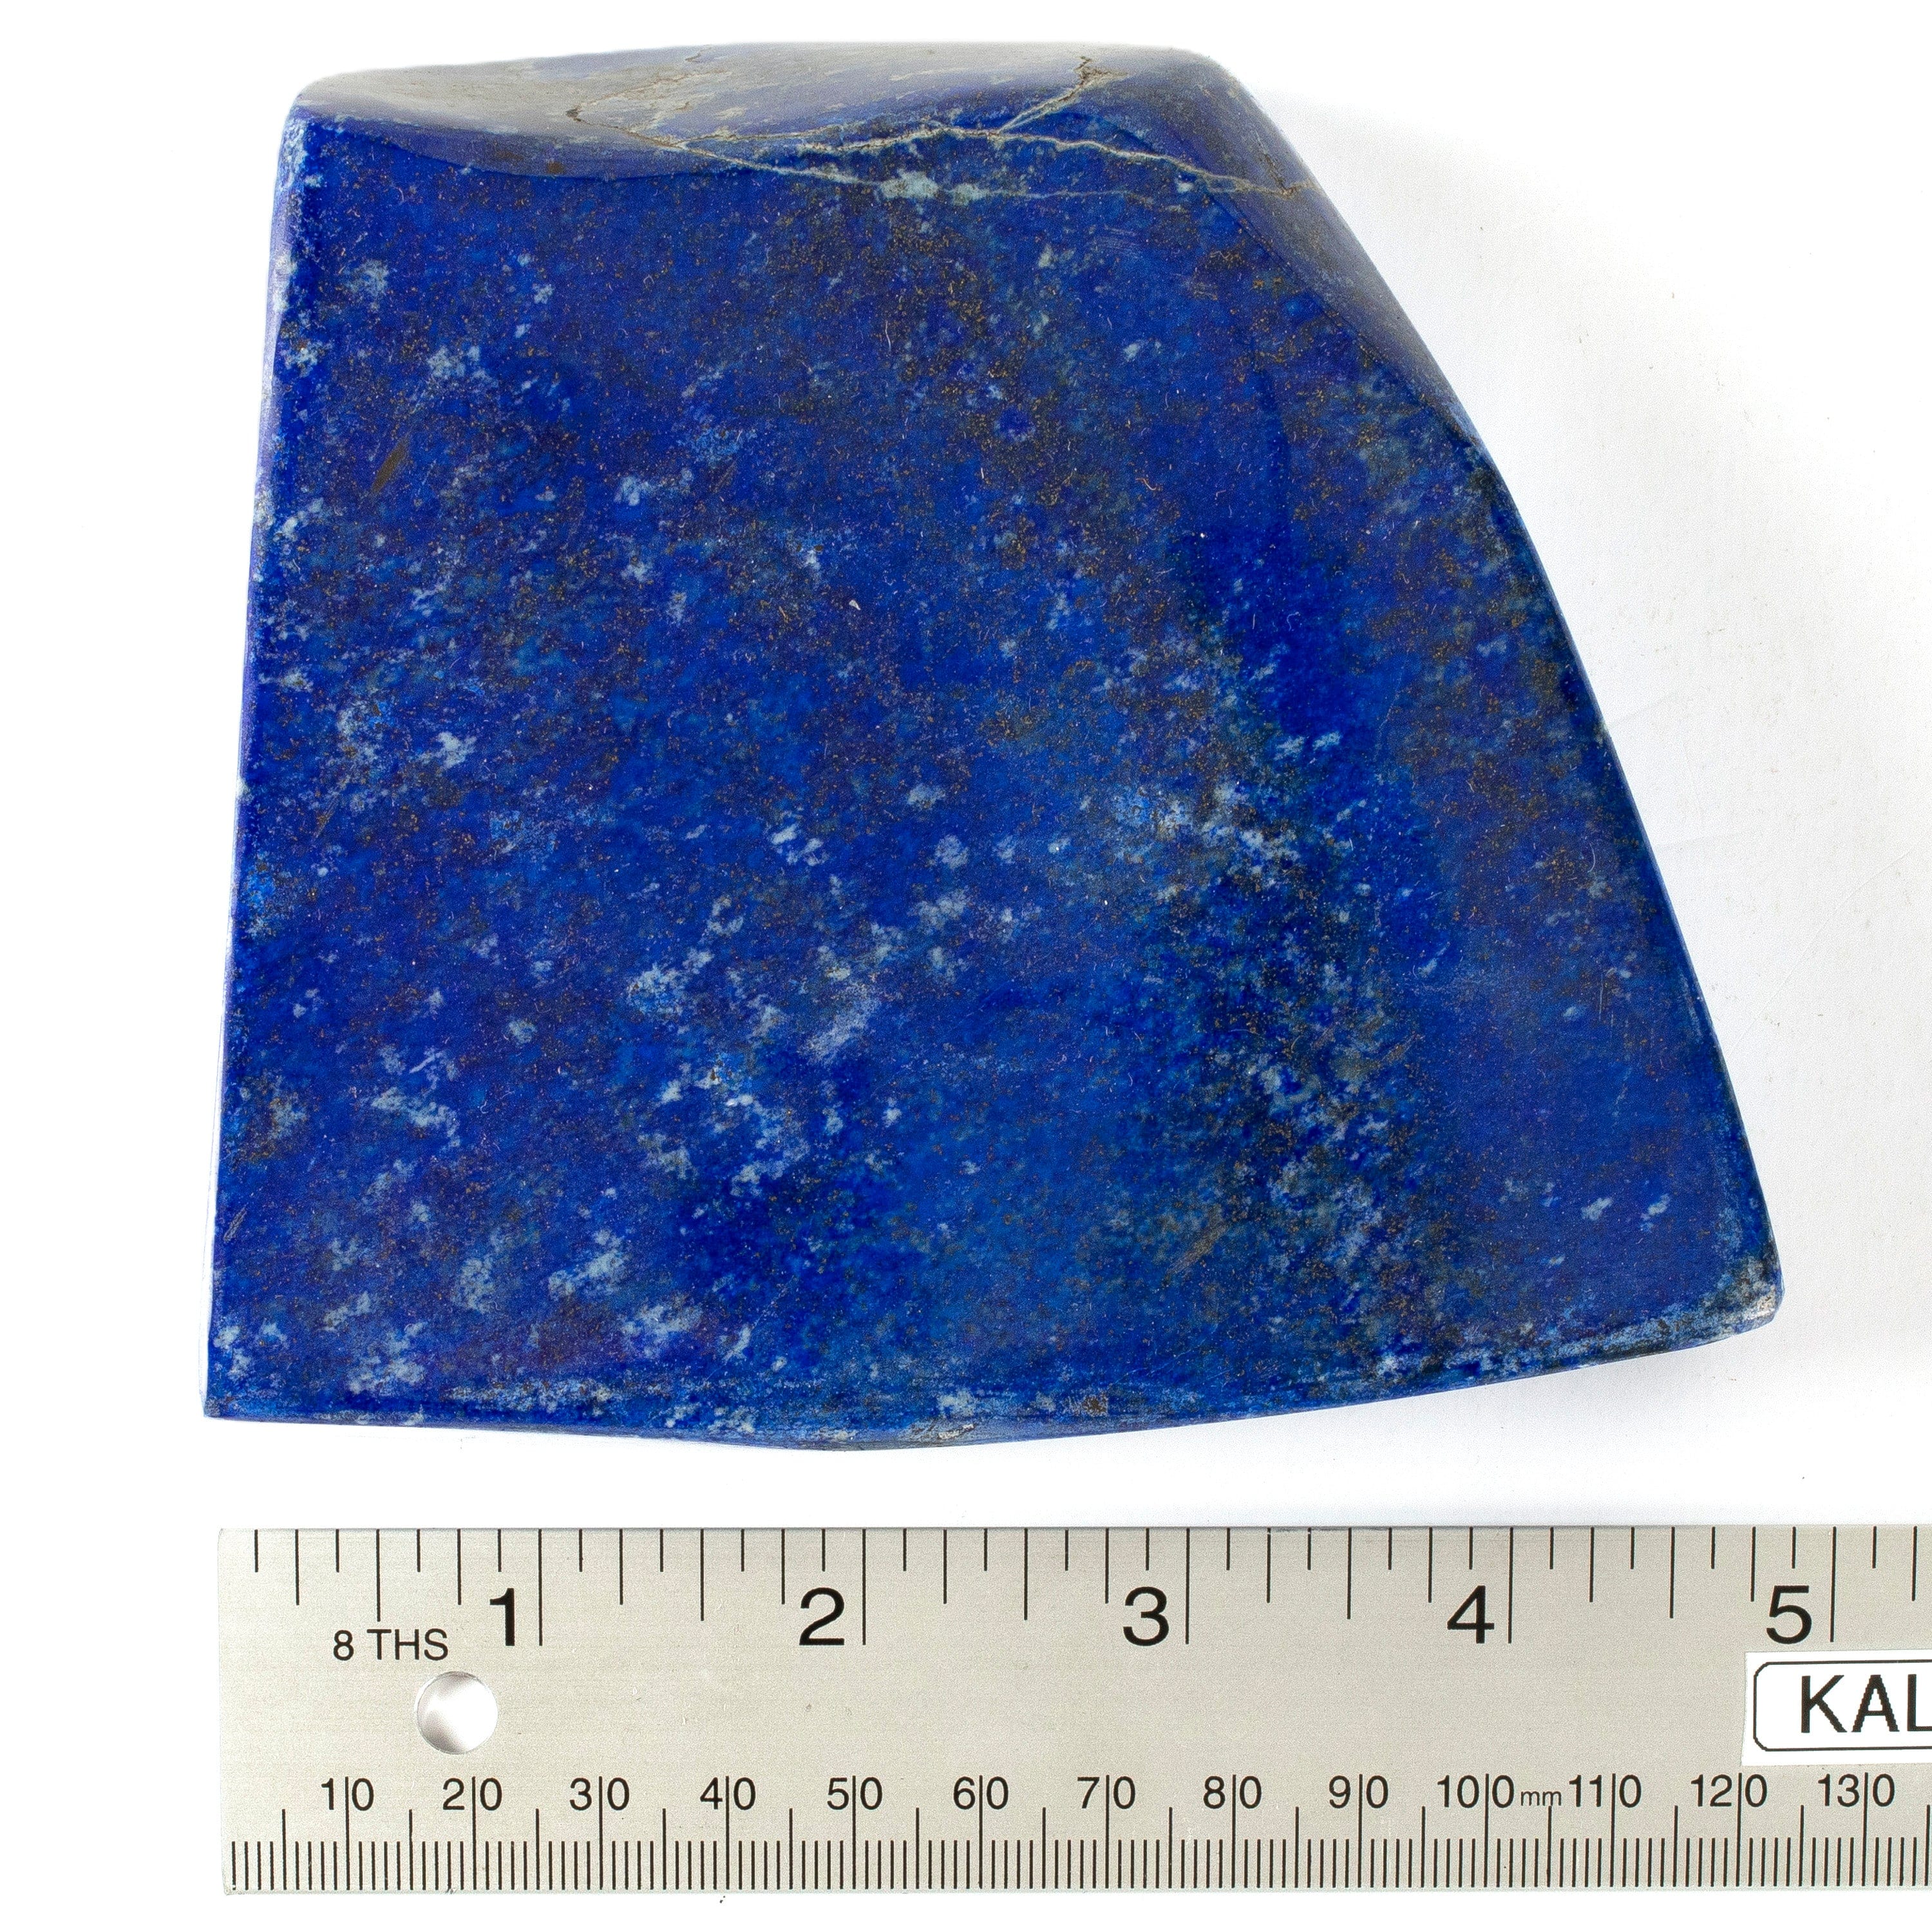 Kalifano Lapis Lapis Lazuli Freeform from Afghanistan - 5" / 834 grams LP850.001